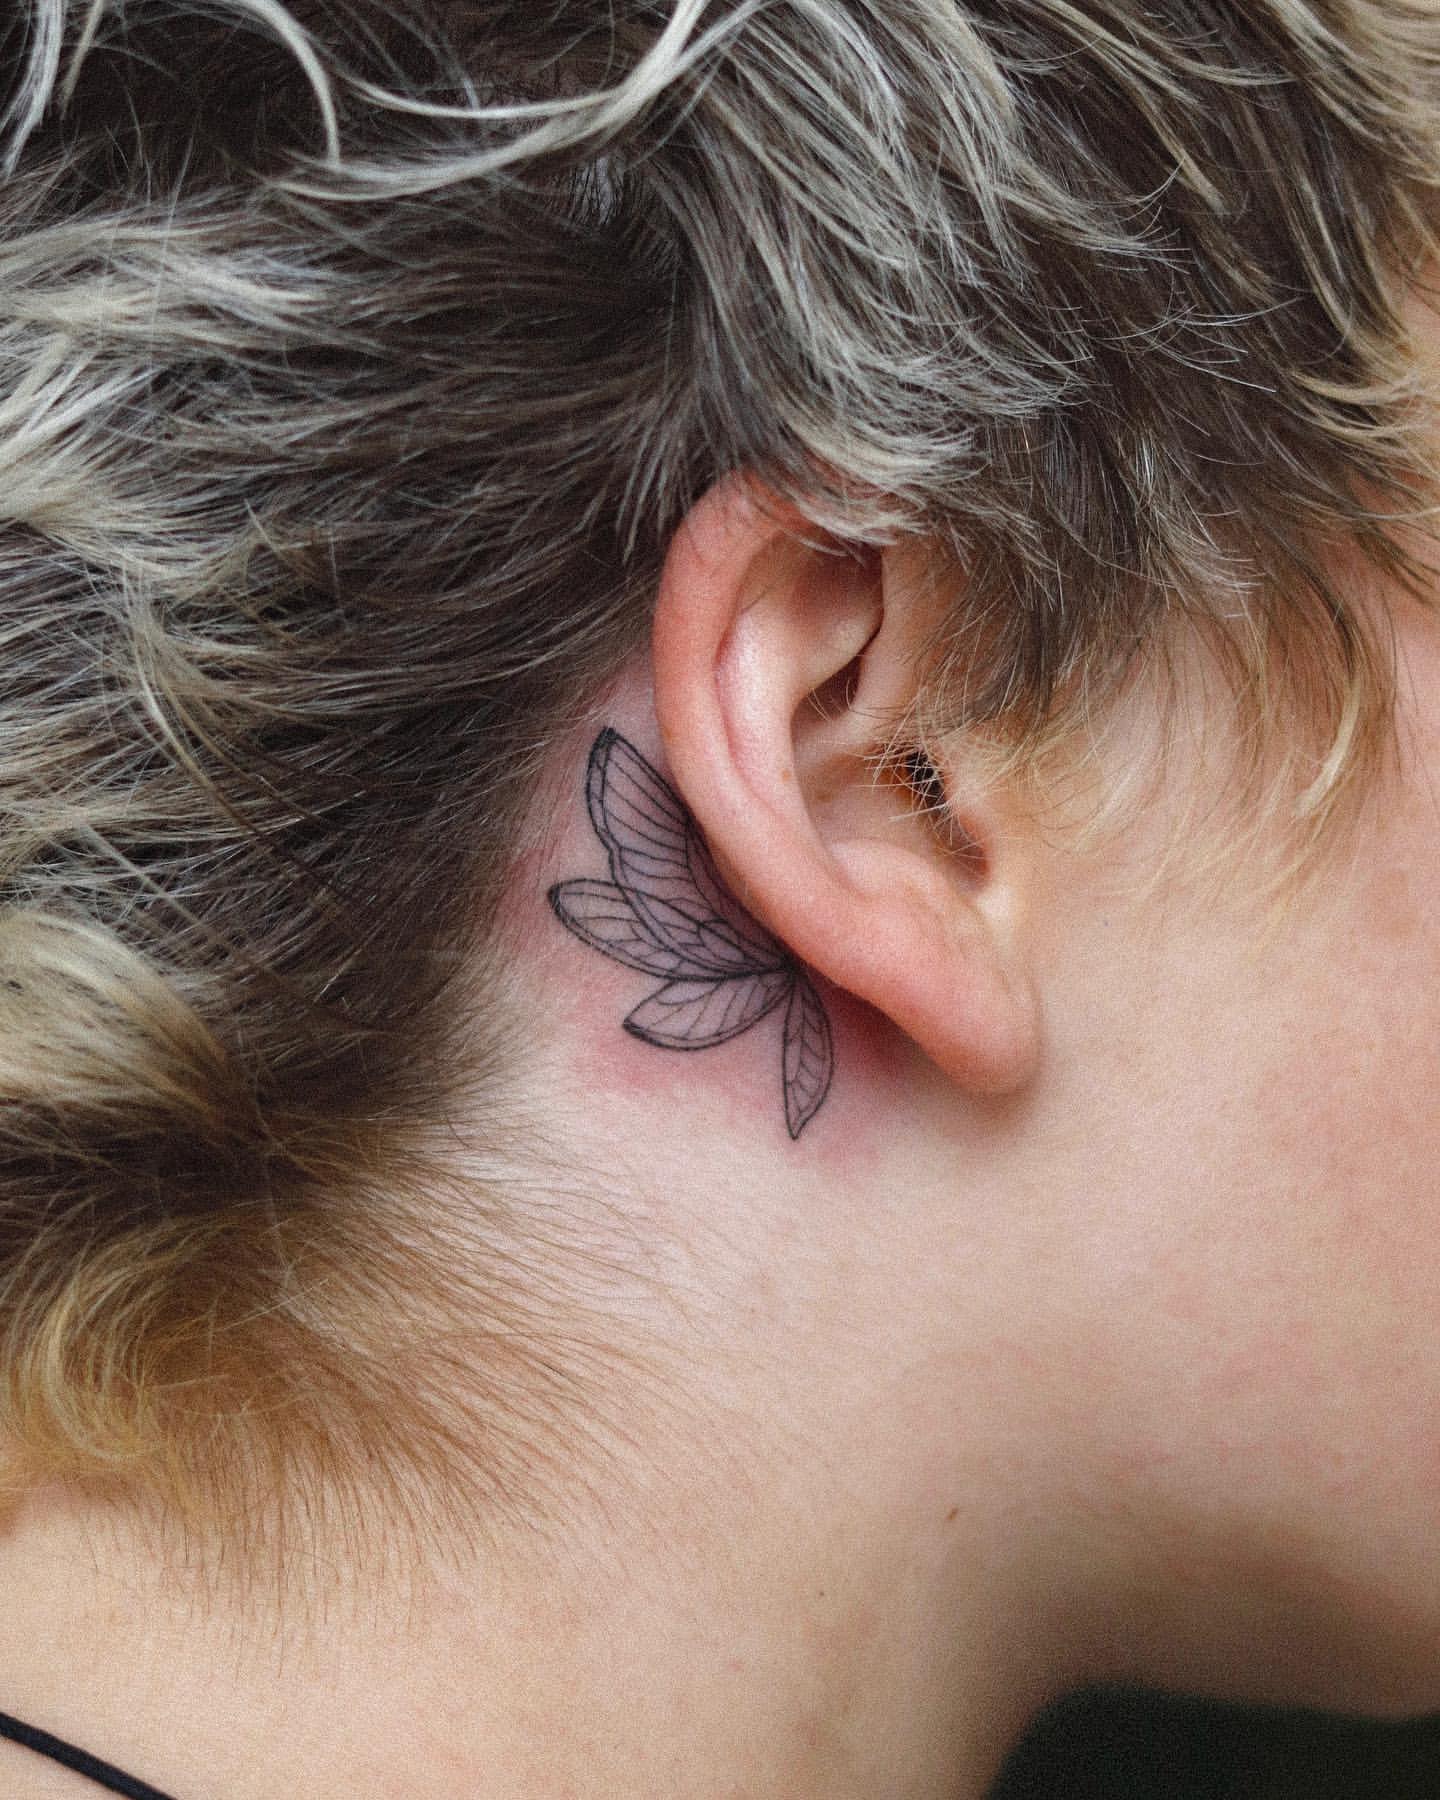 Behind the Ear Tattoos 8